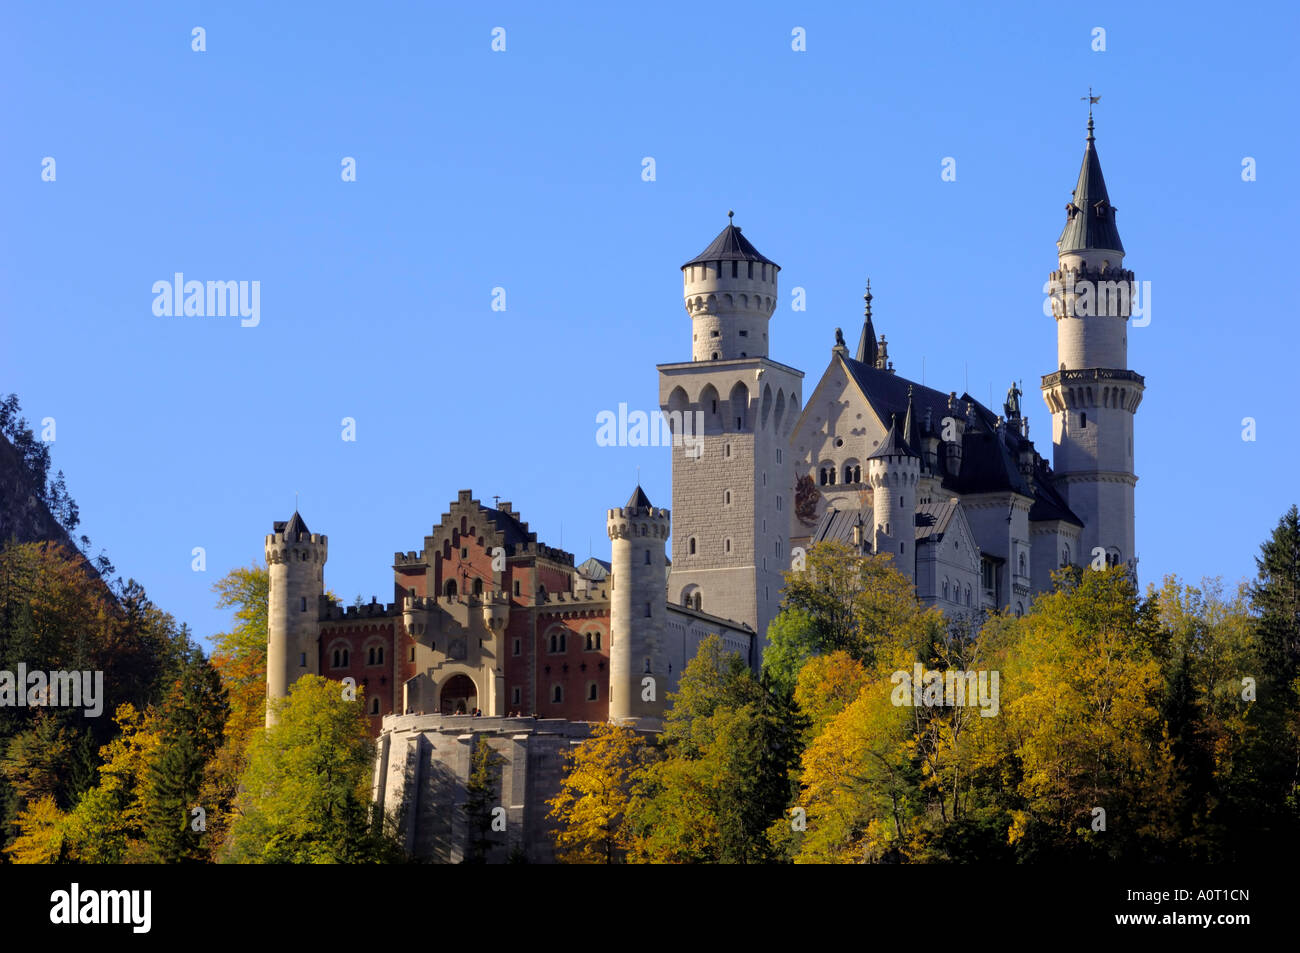 Schloss Neuschwanstein fairytale castle built by King Ludwig II near Fussen Bavaria Bayern Germany Europe Stock Photo